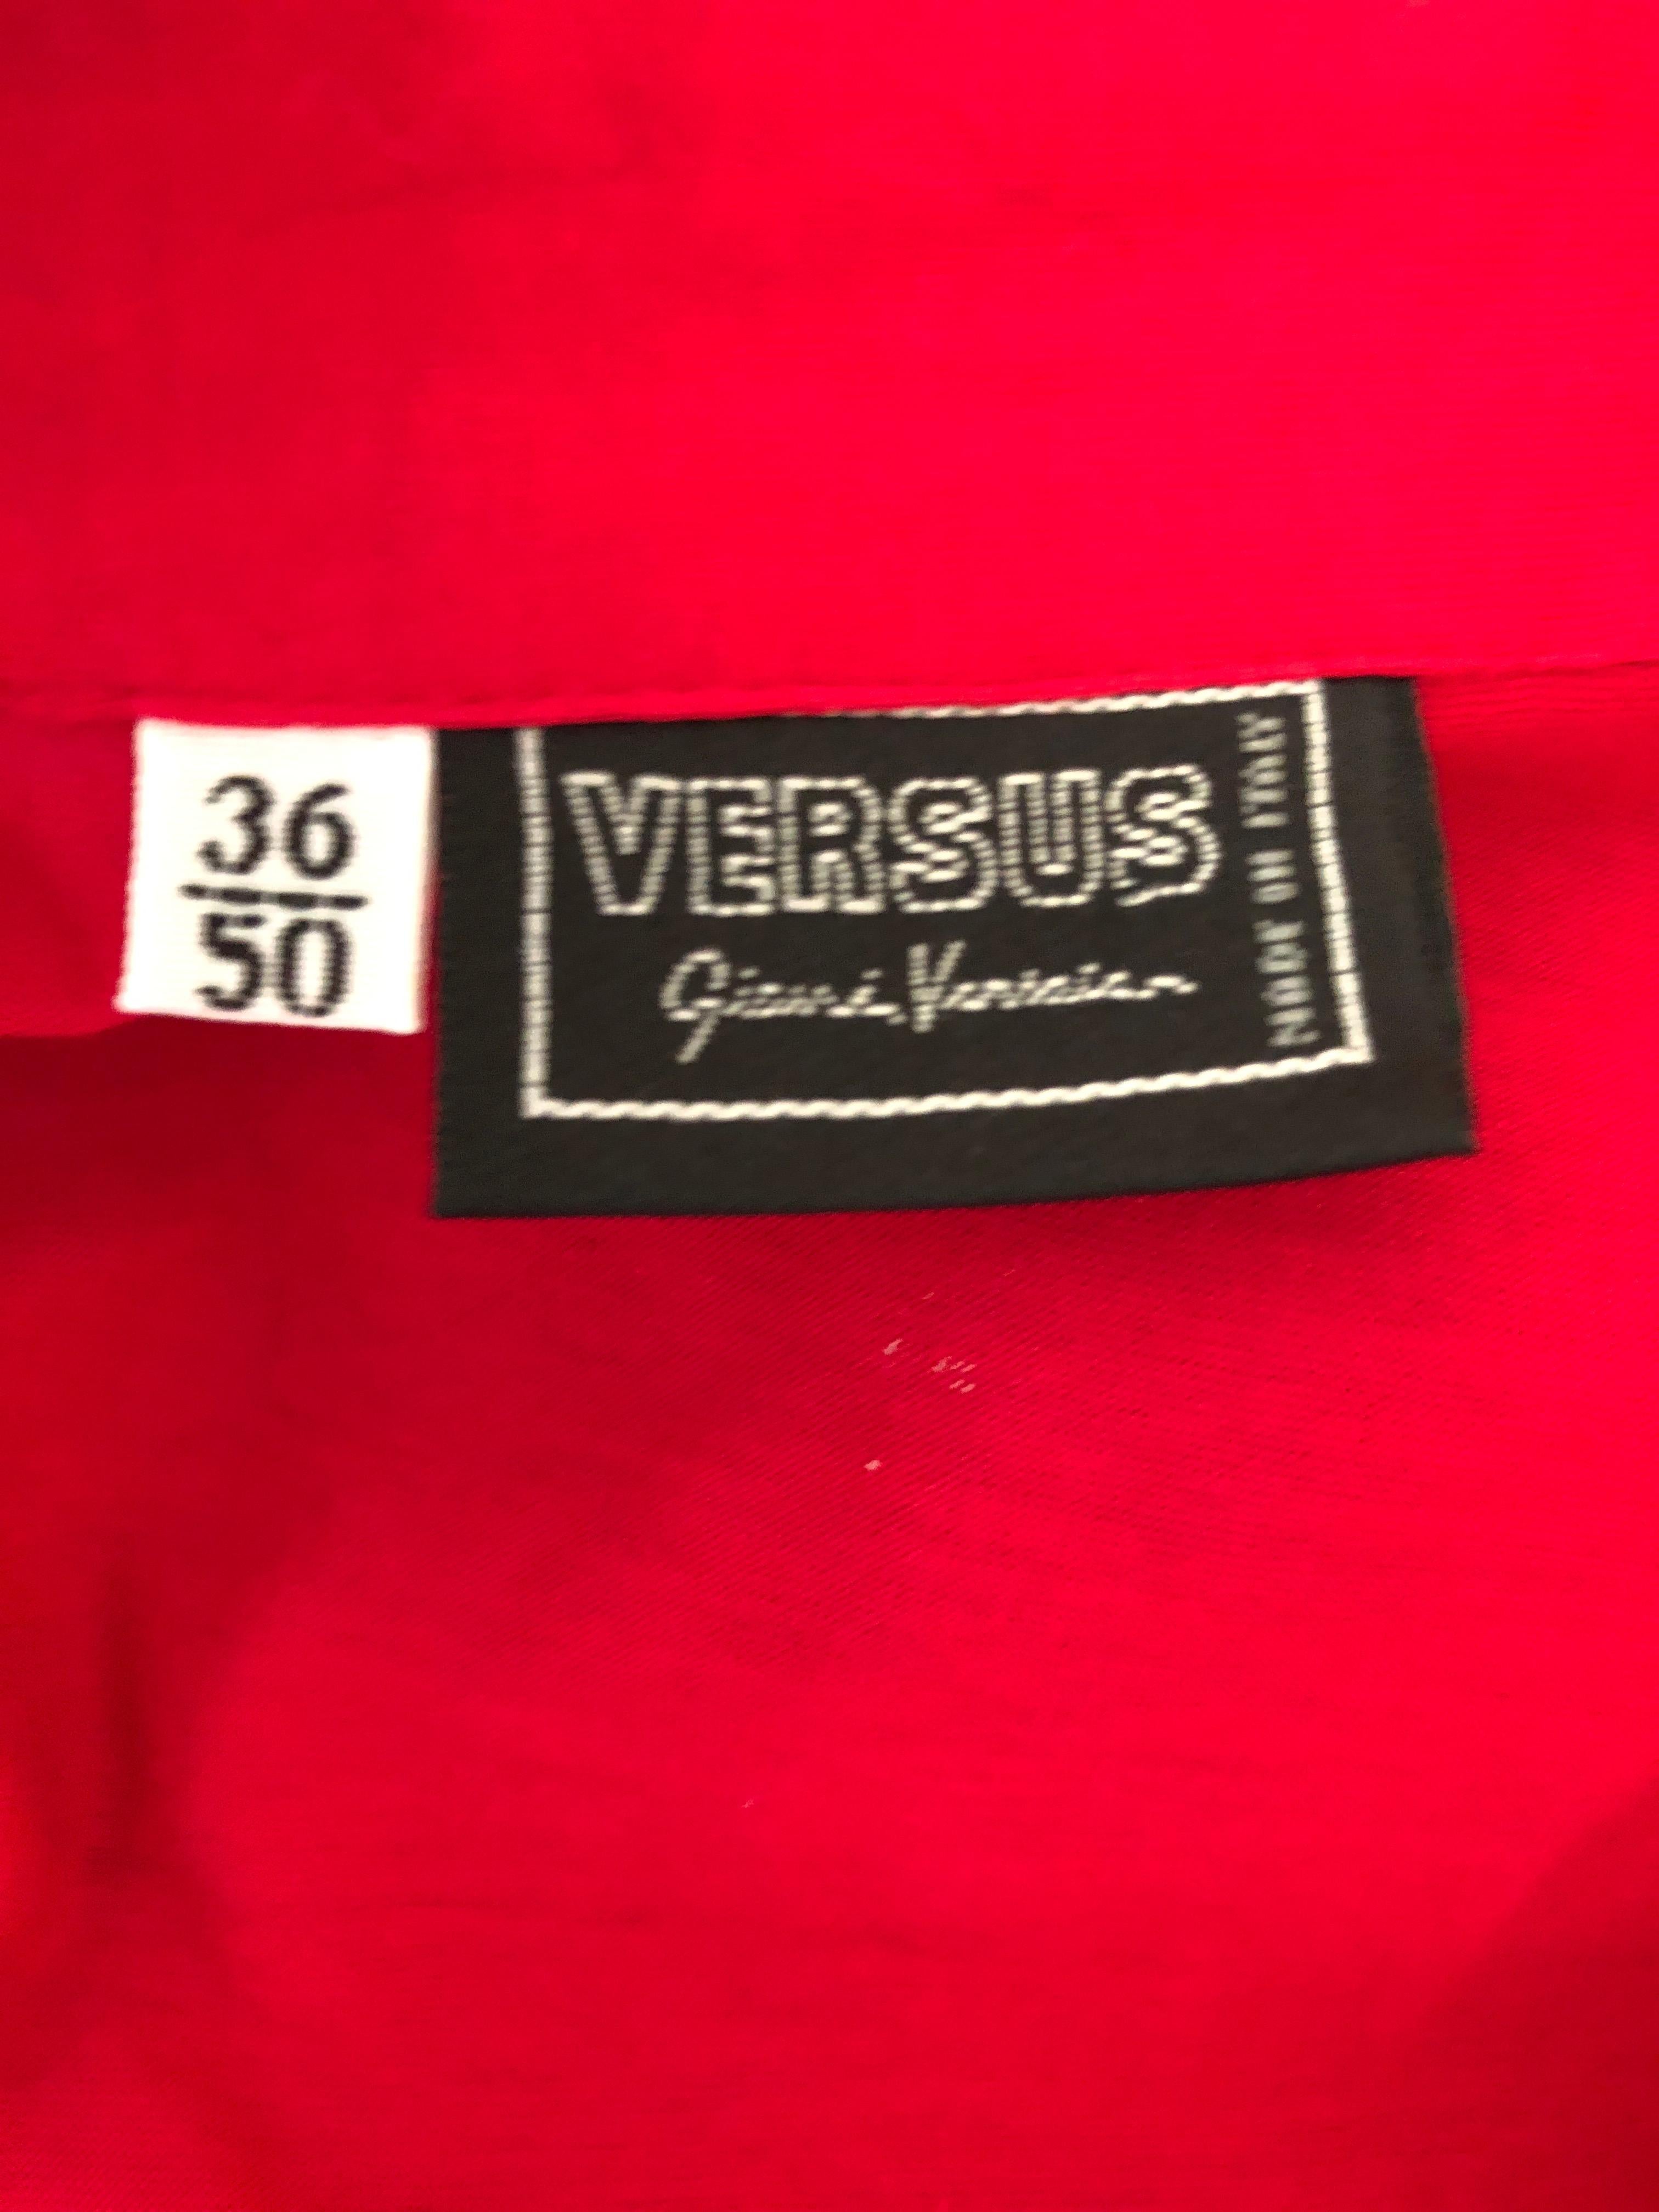 Versus Gianni Versace Rare 1993 Red Sheer Mesh Men's Large Shirt  For Sale 5